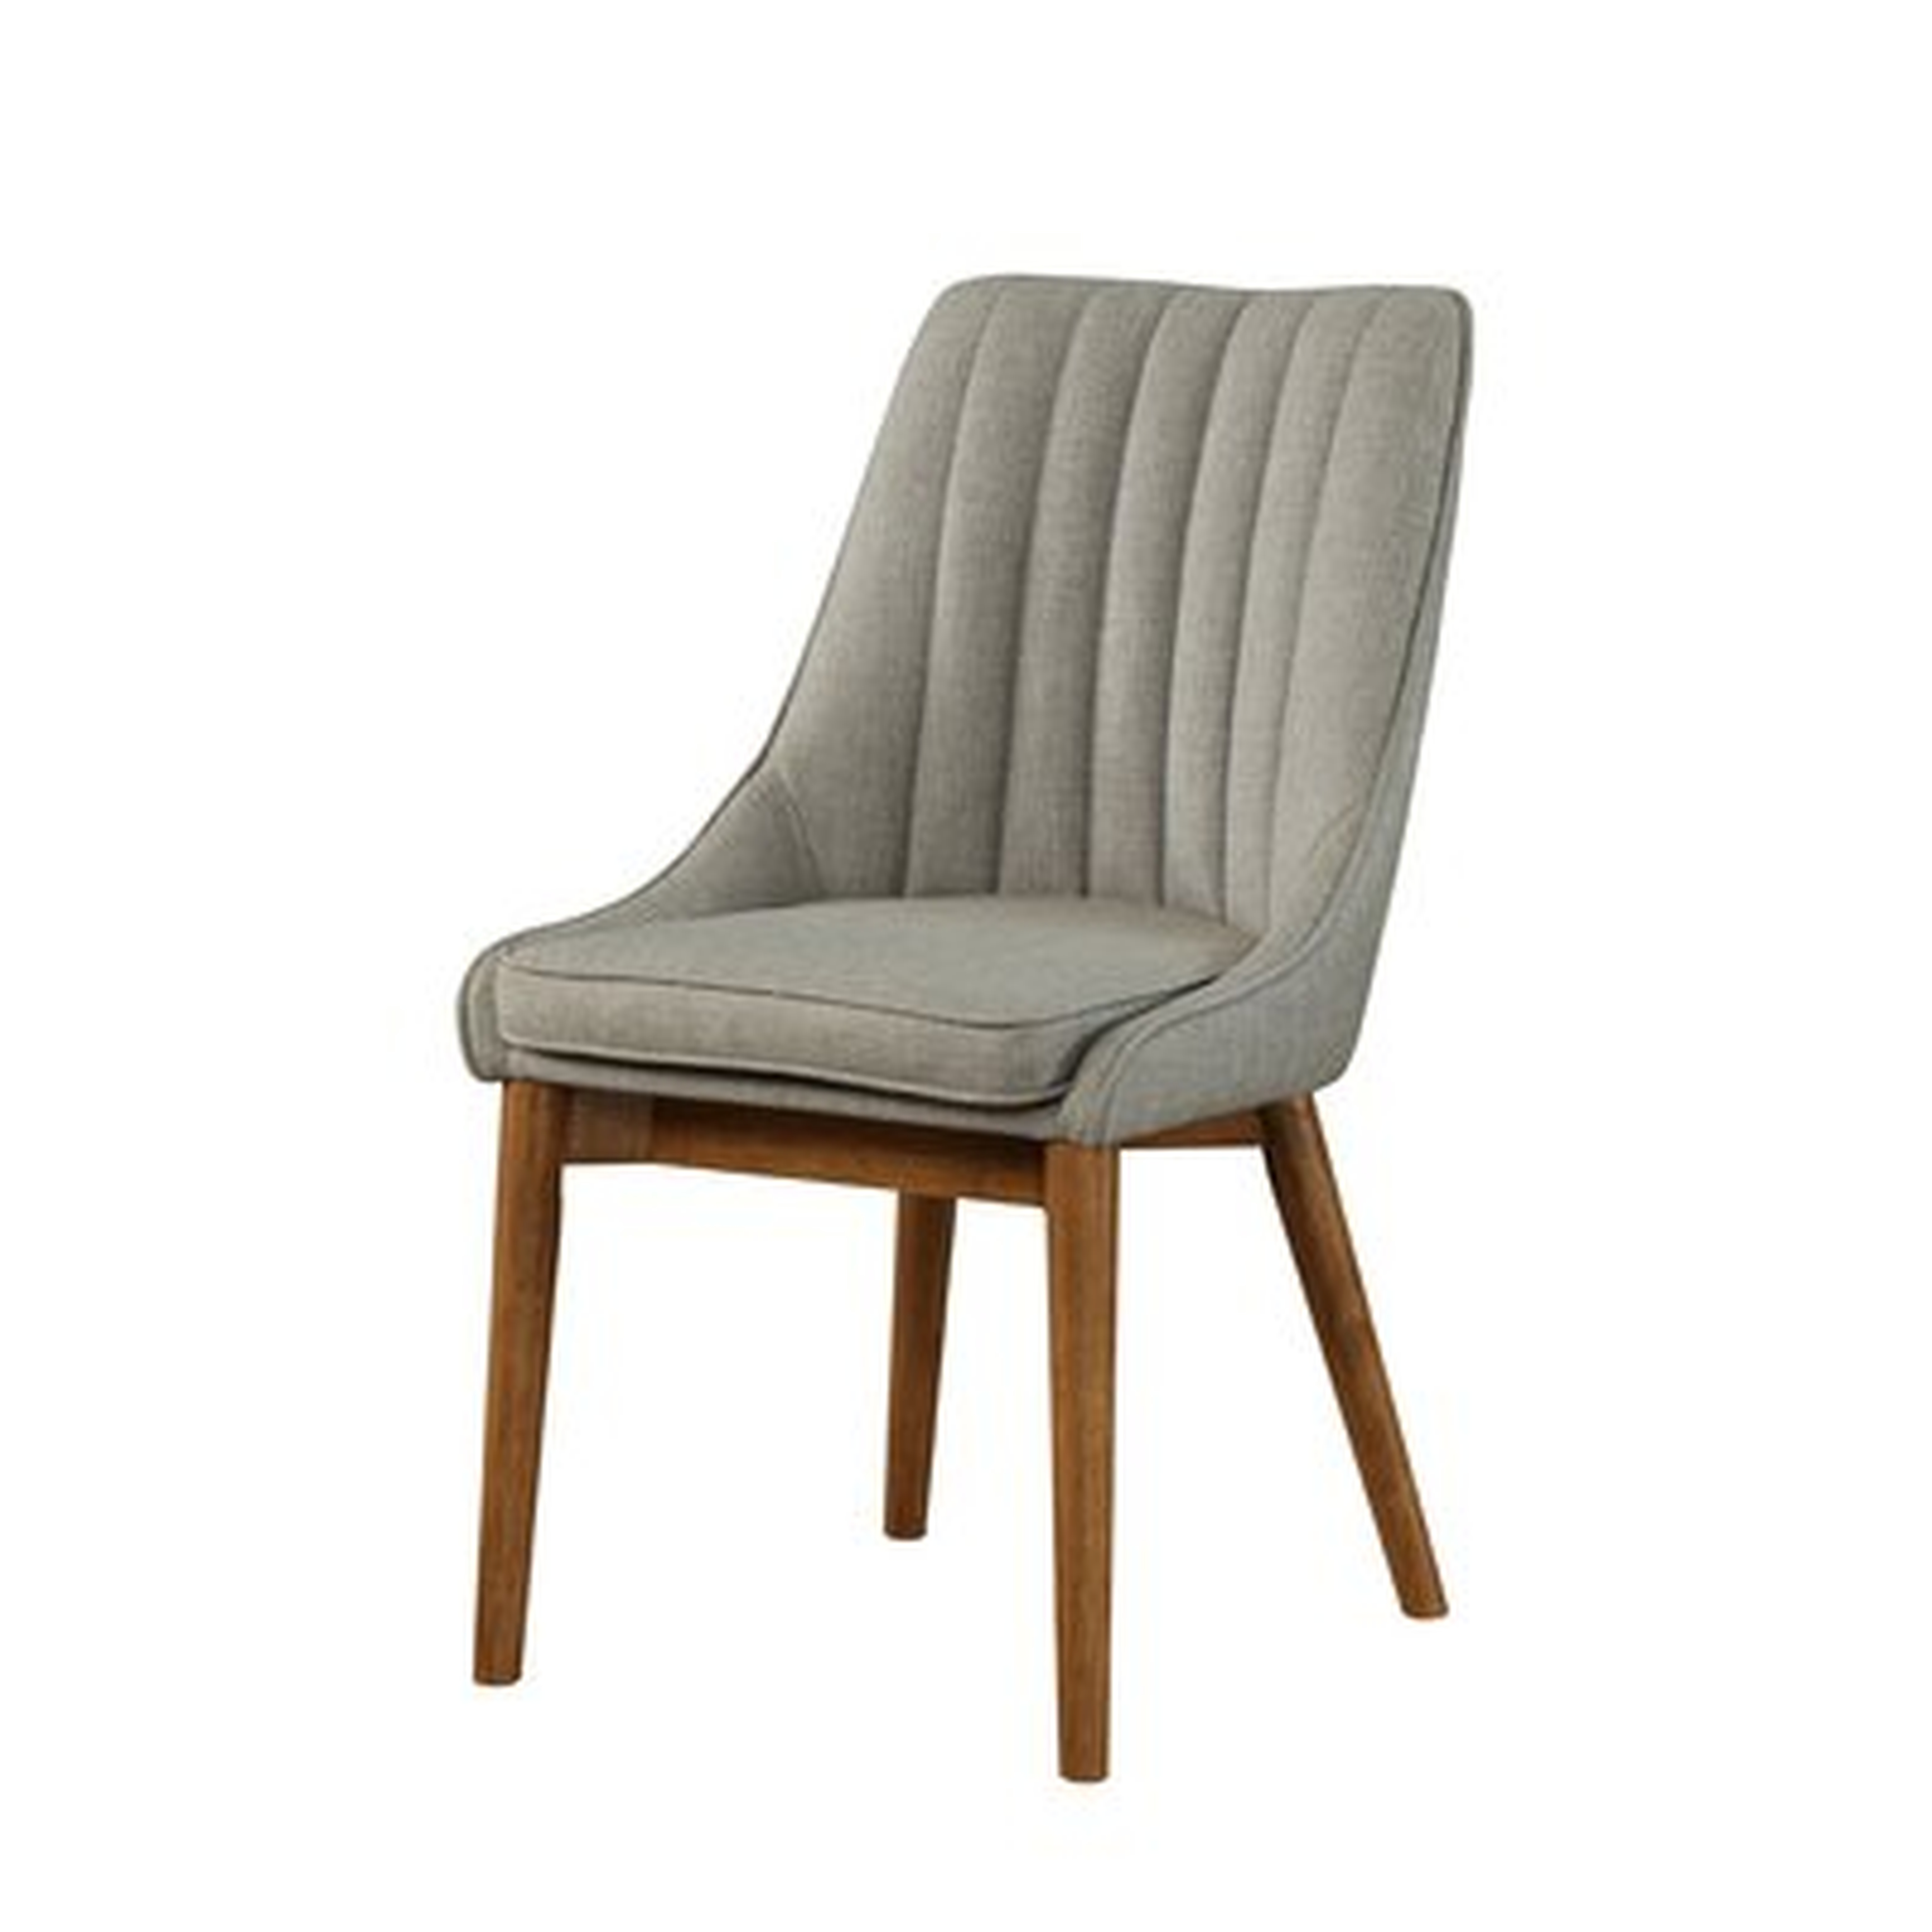 Wilker Upholstered Side Chair in Gray - Wayfair